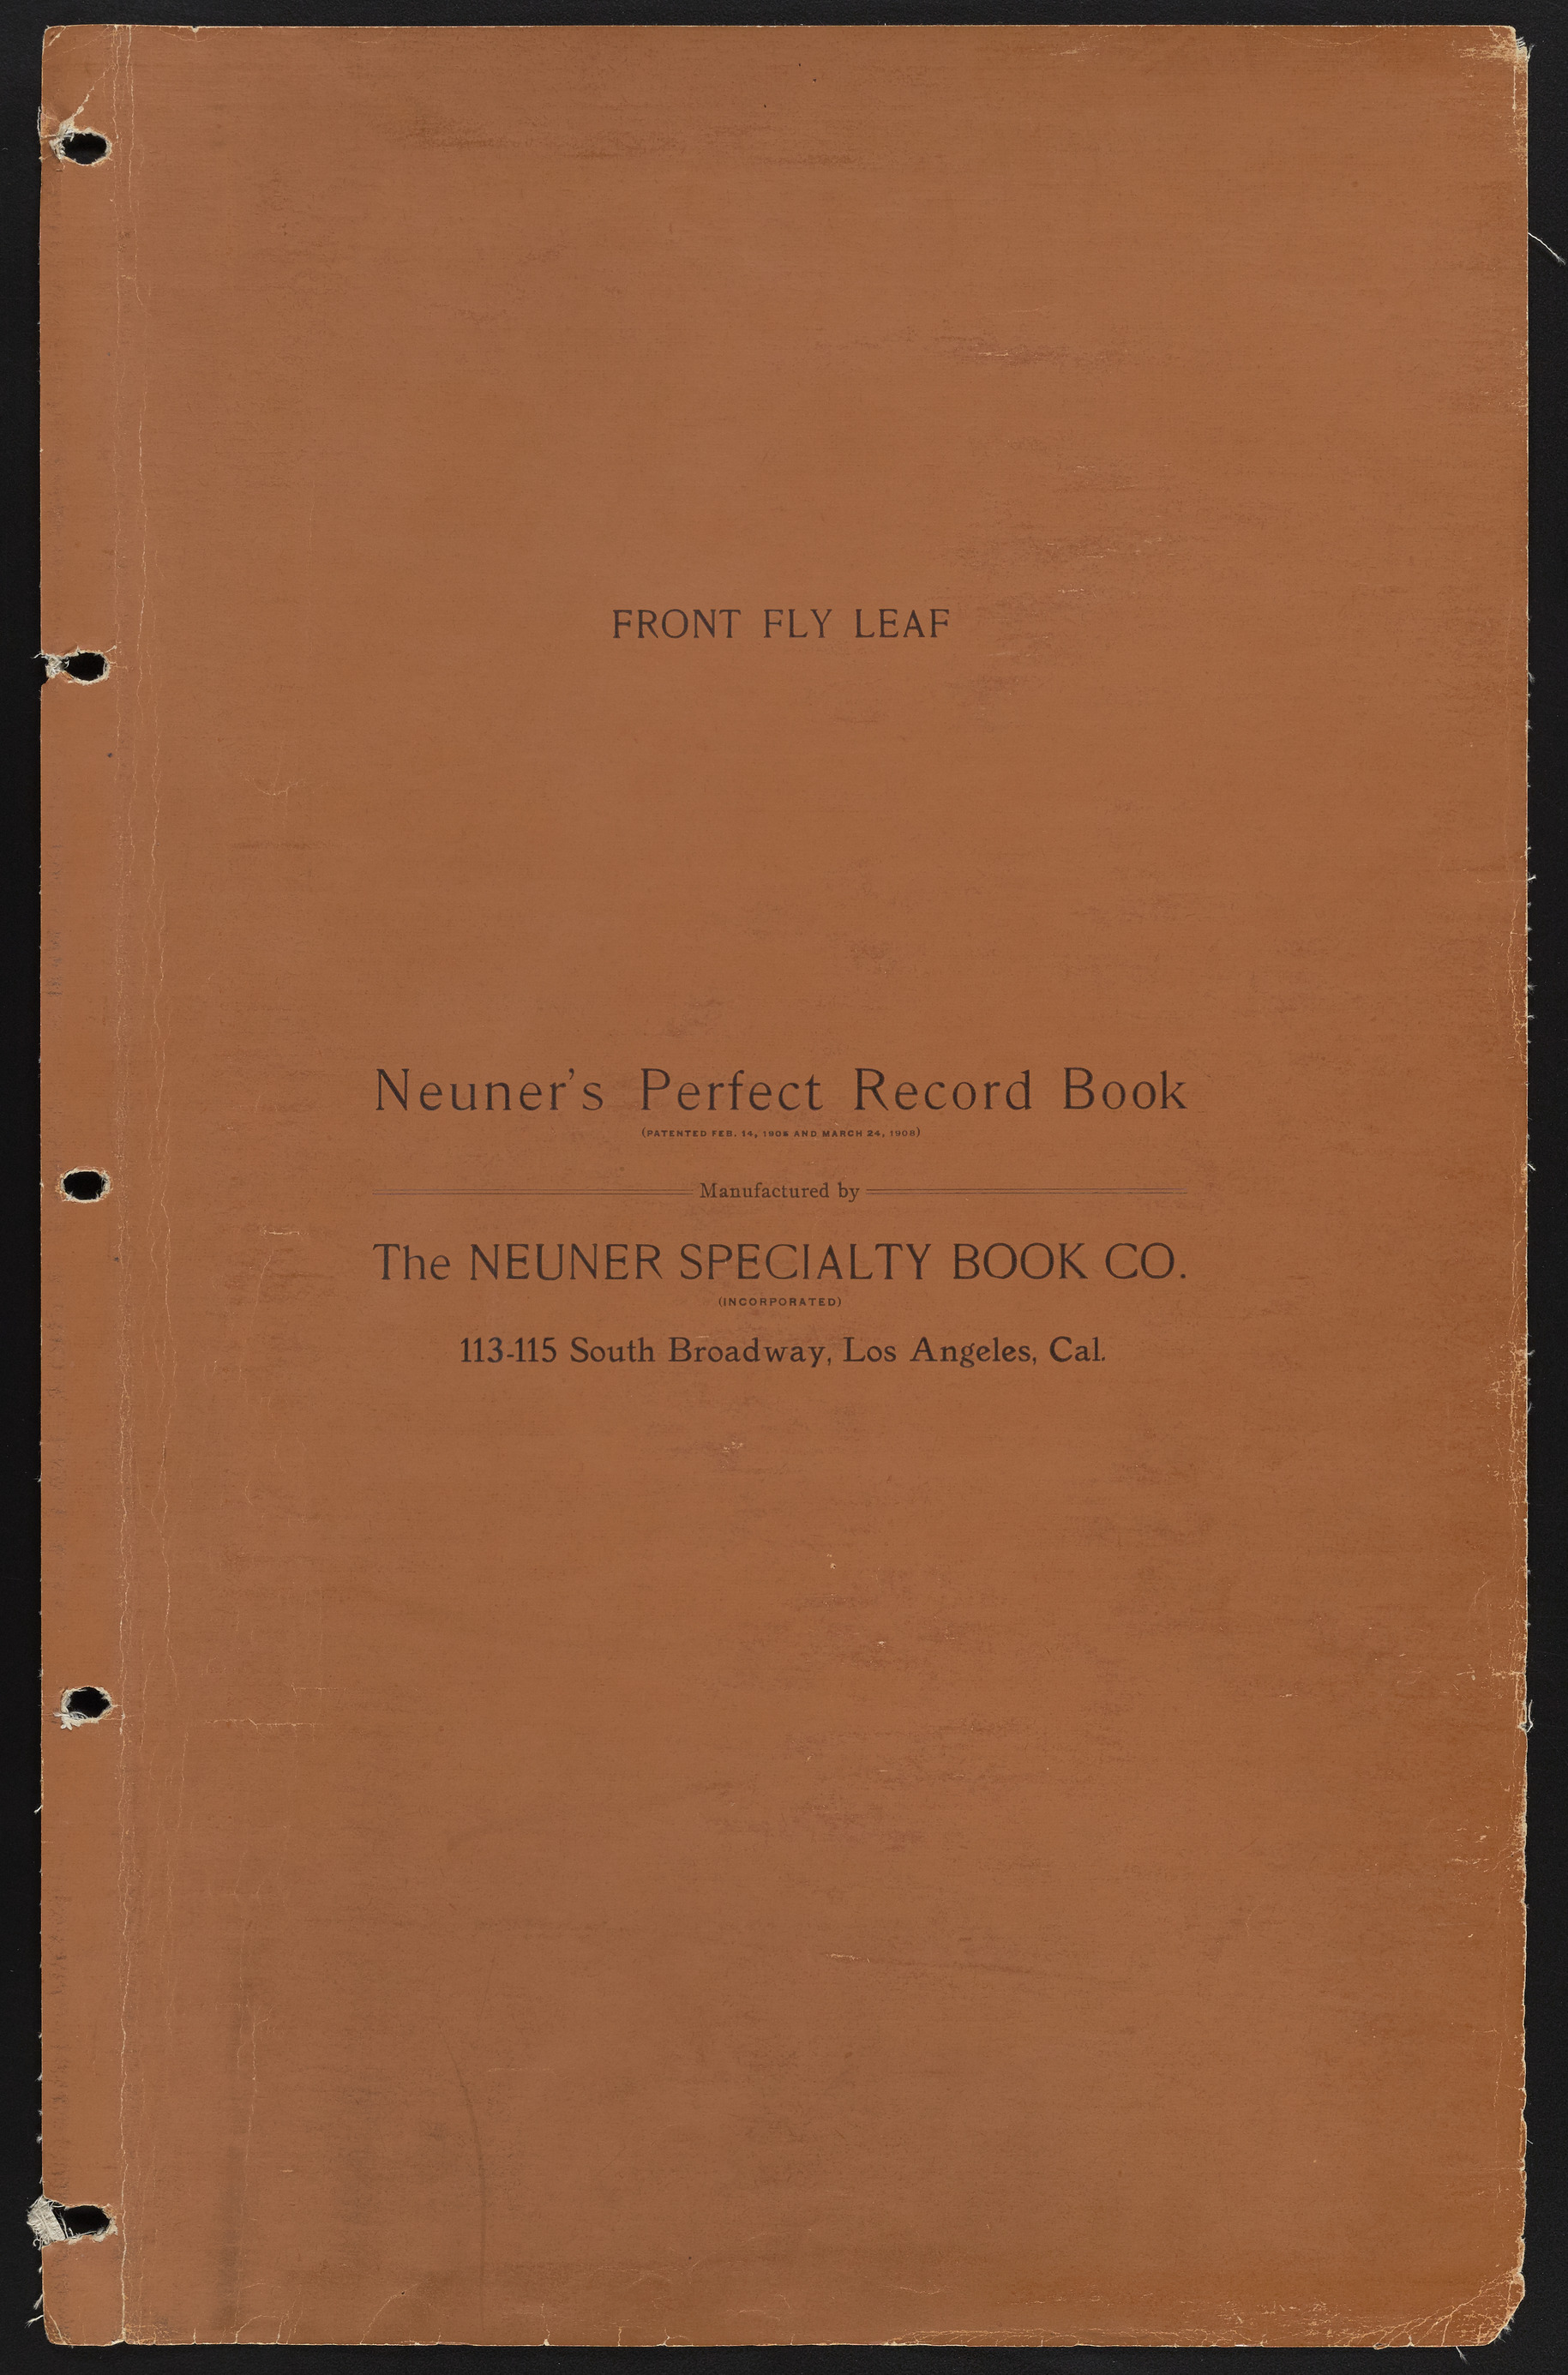 Las Vegas City Commission Minutes, June 22, 1911 to February 7, 1922, lvc000001-343